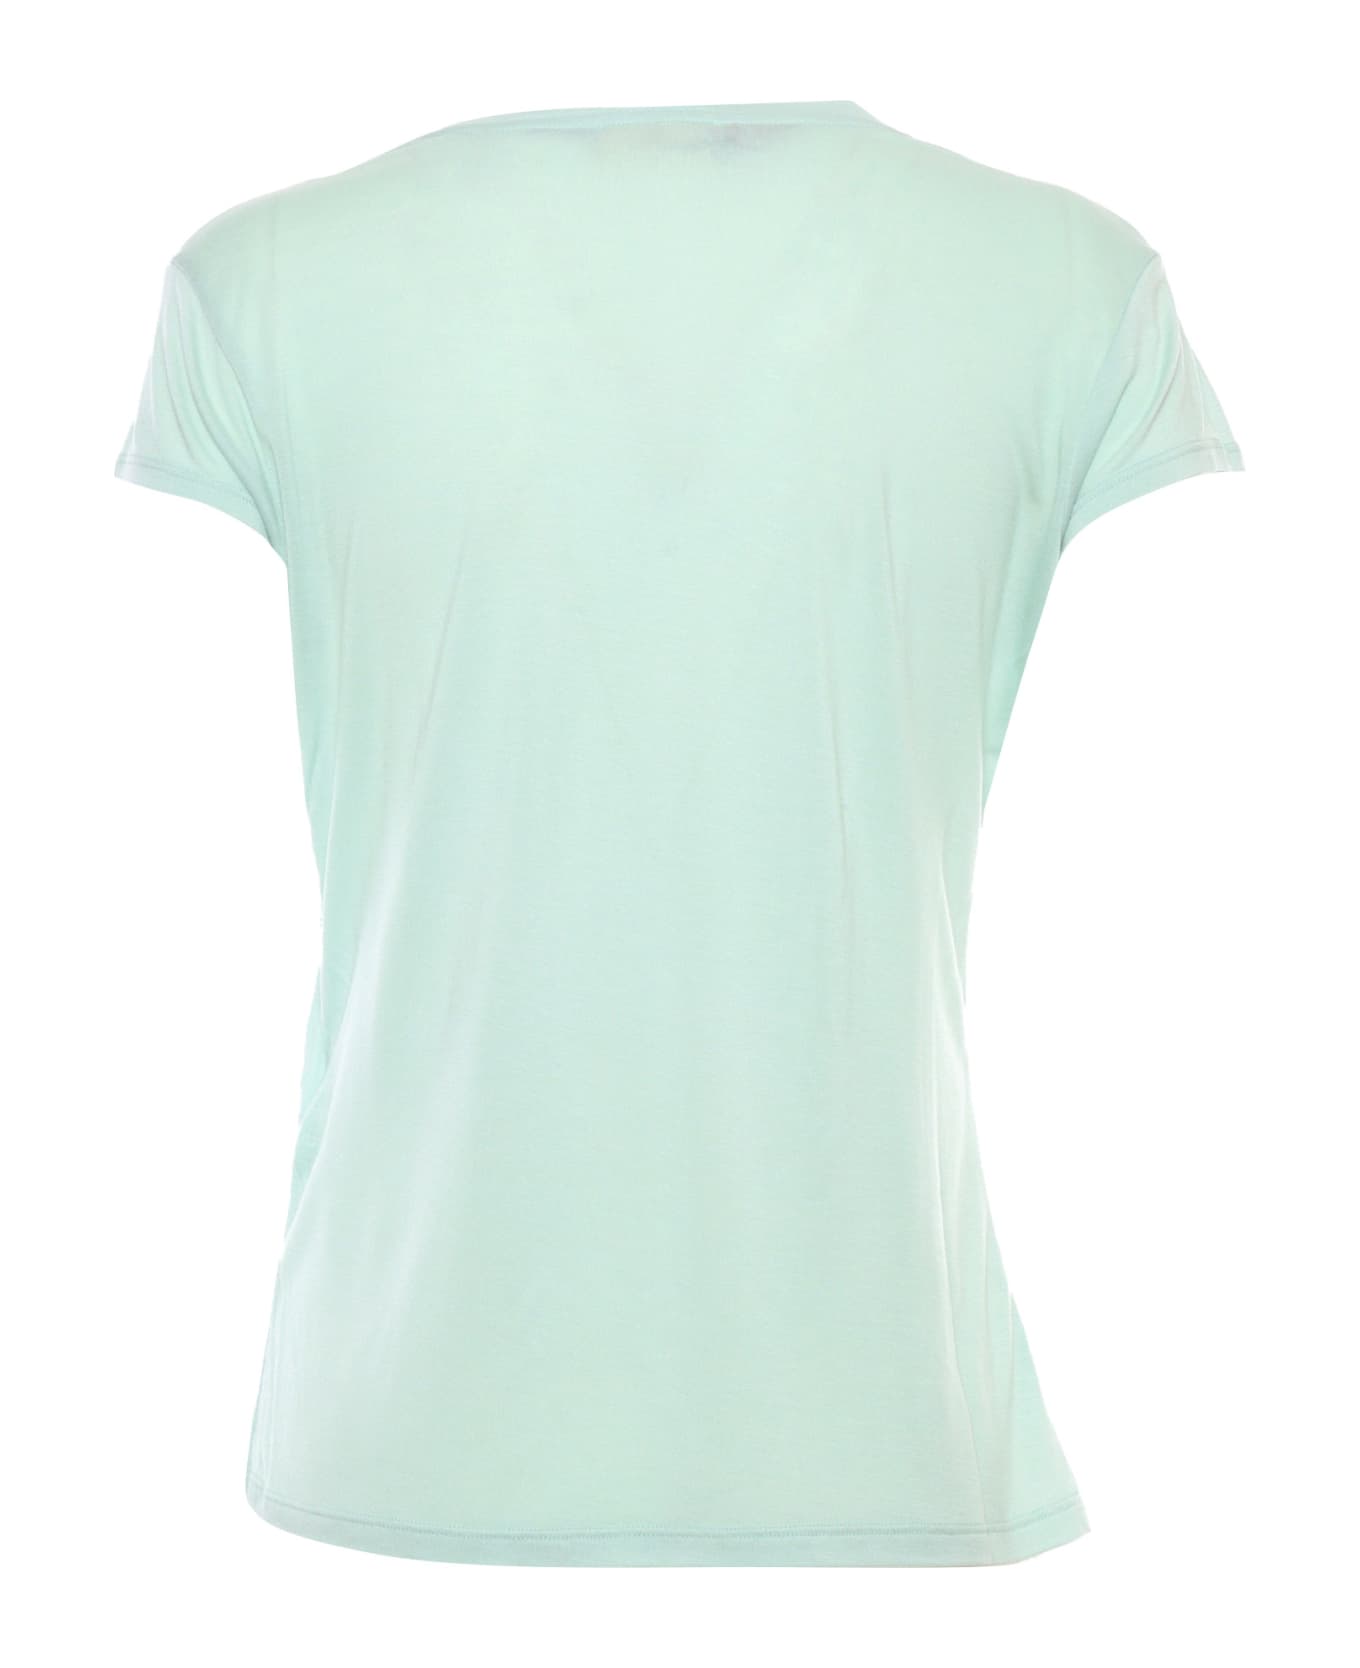 Elisabetta Franchi Green Mint T-shirt With Prints - LIGHT BLUE